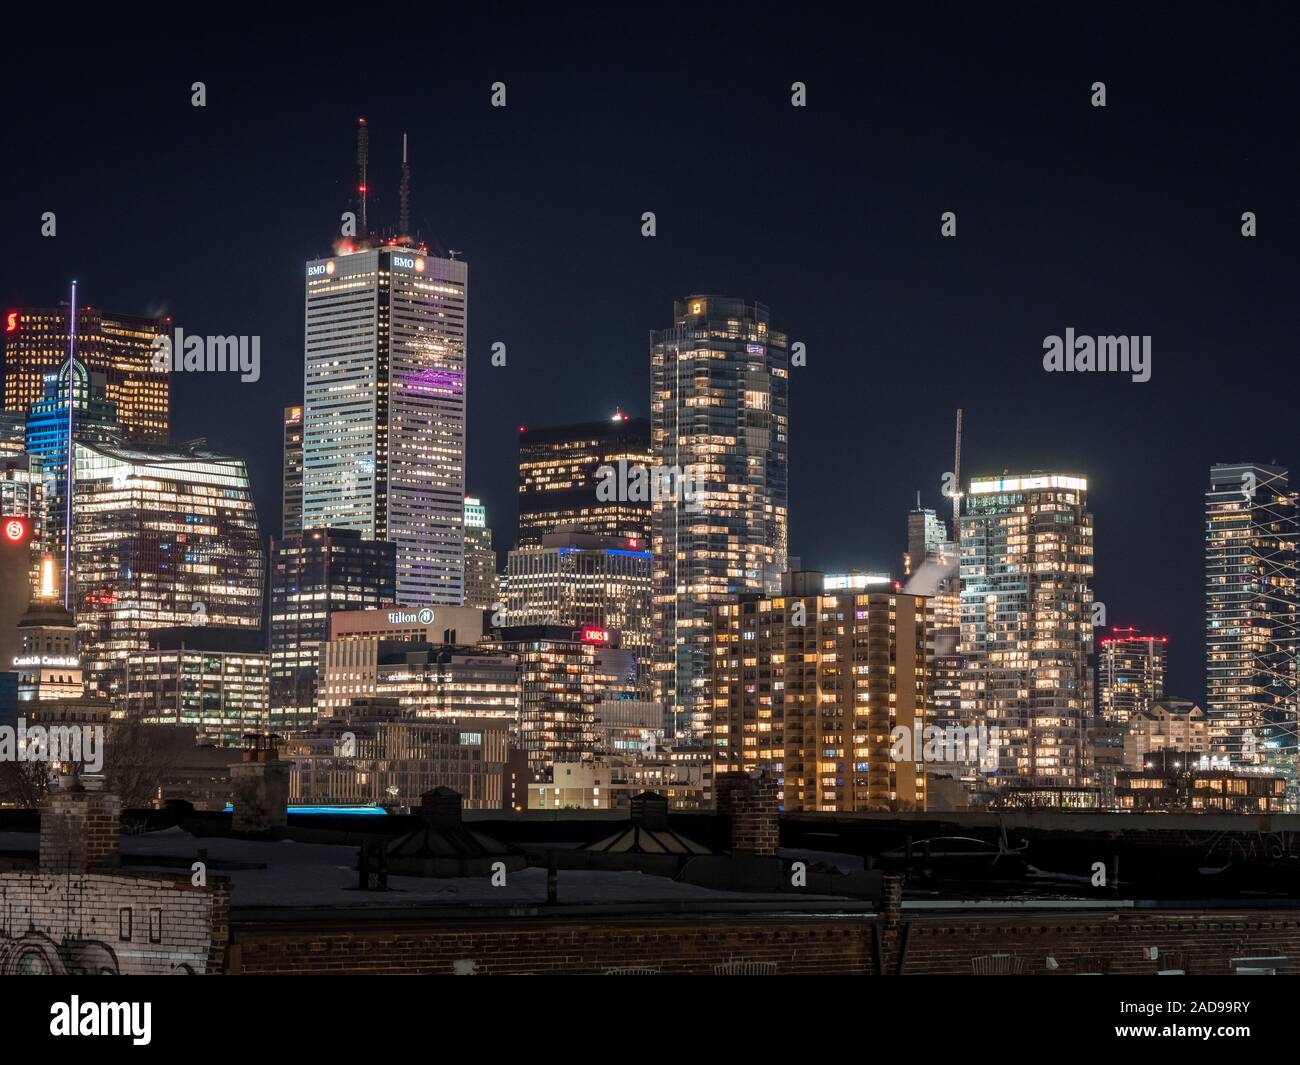 Toronto Skyline view - close up at night taken in November 2019 showing city's development Stock Photo